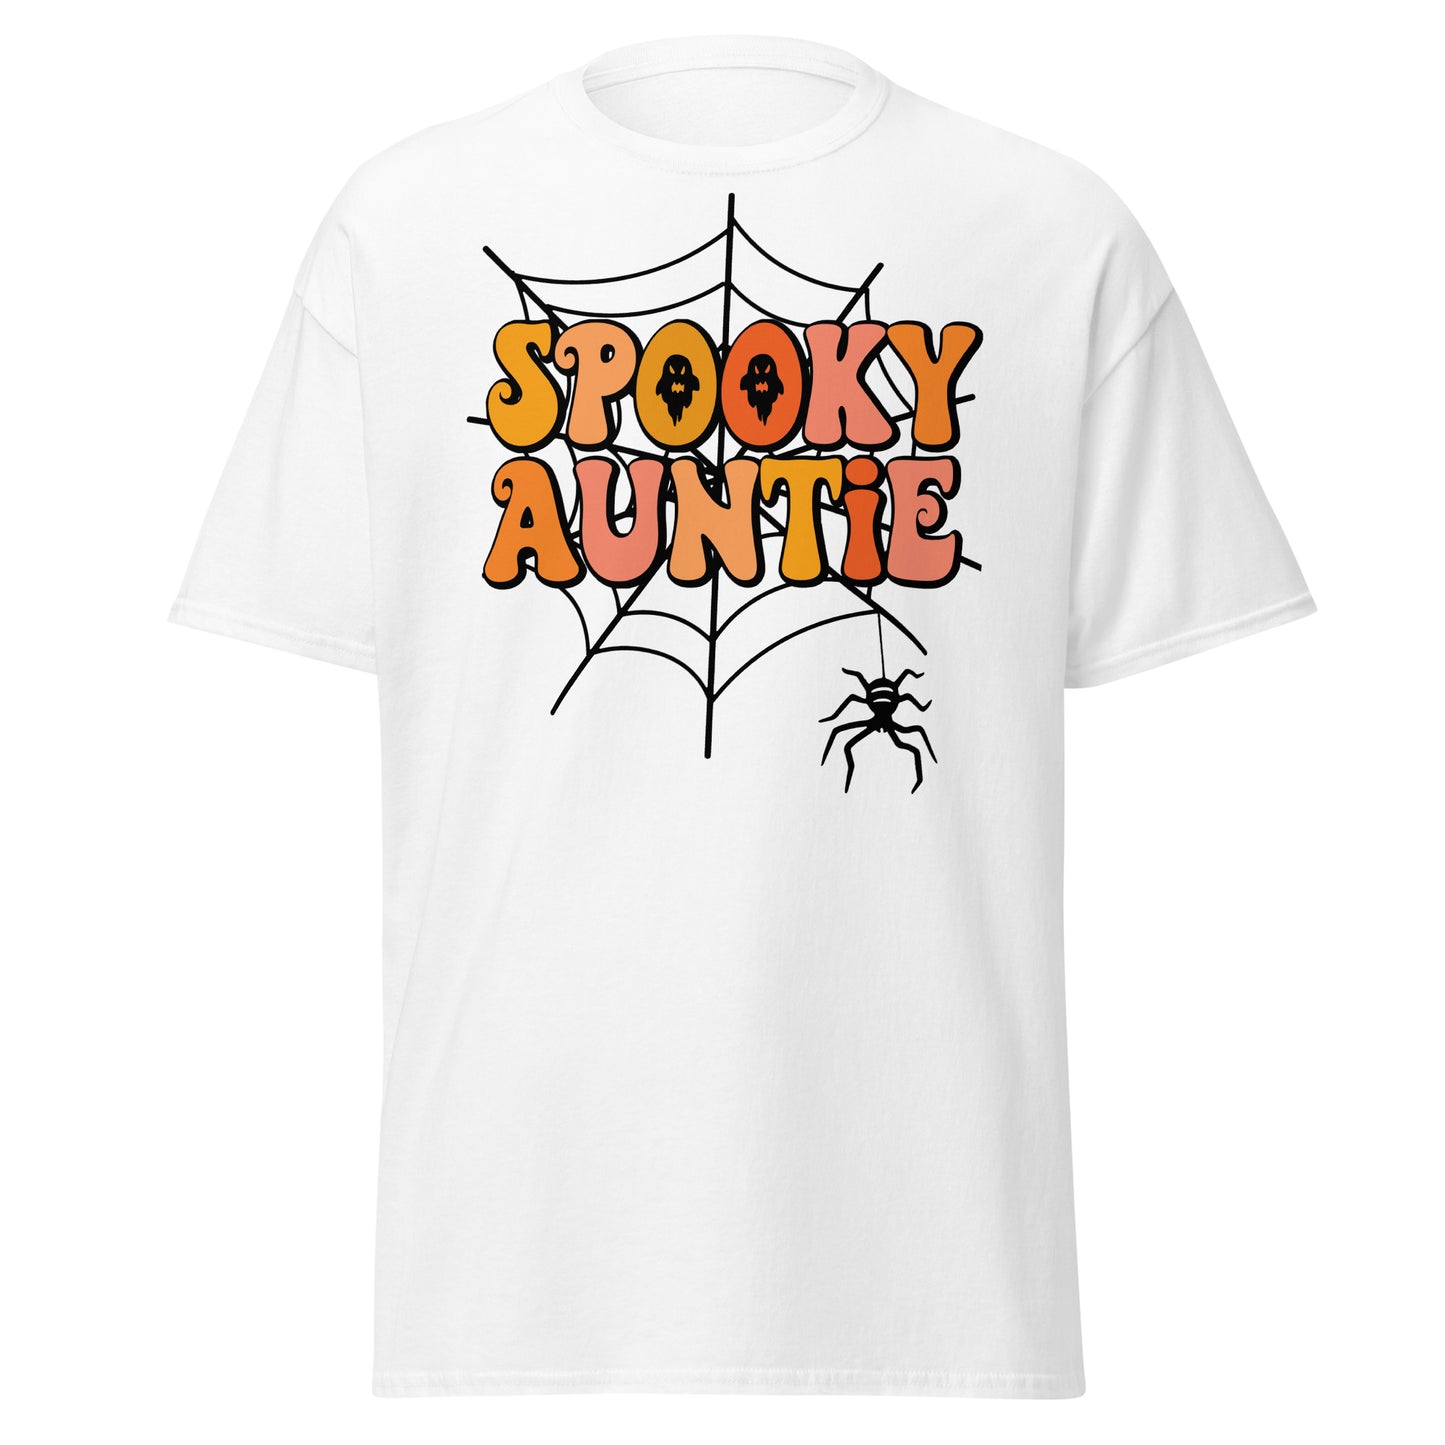 Spooky Auntie' Shirt: Stylish Halloween Fun 🎃 T-Shirt